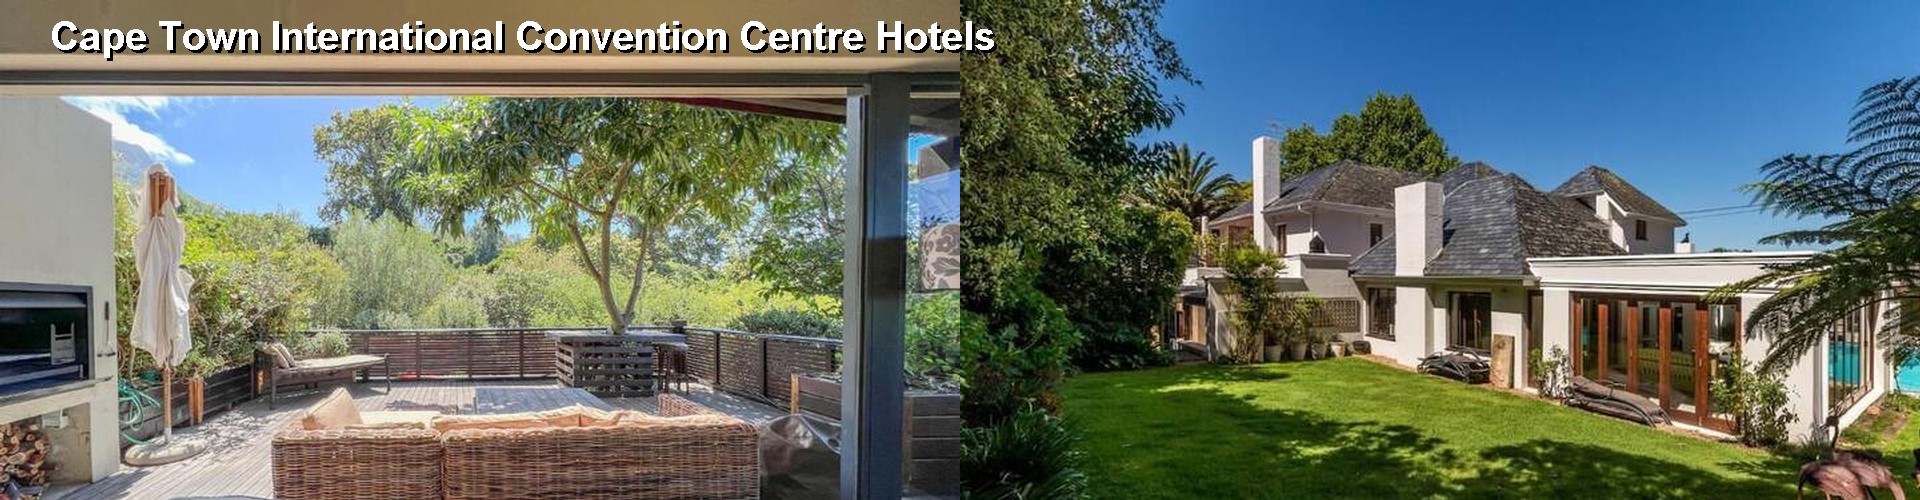 5 Best Hotels near Cape Town International Convention Centre